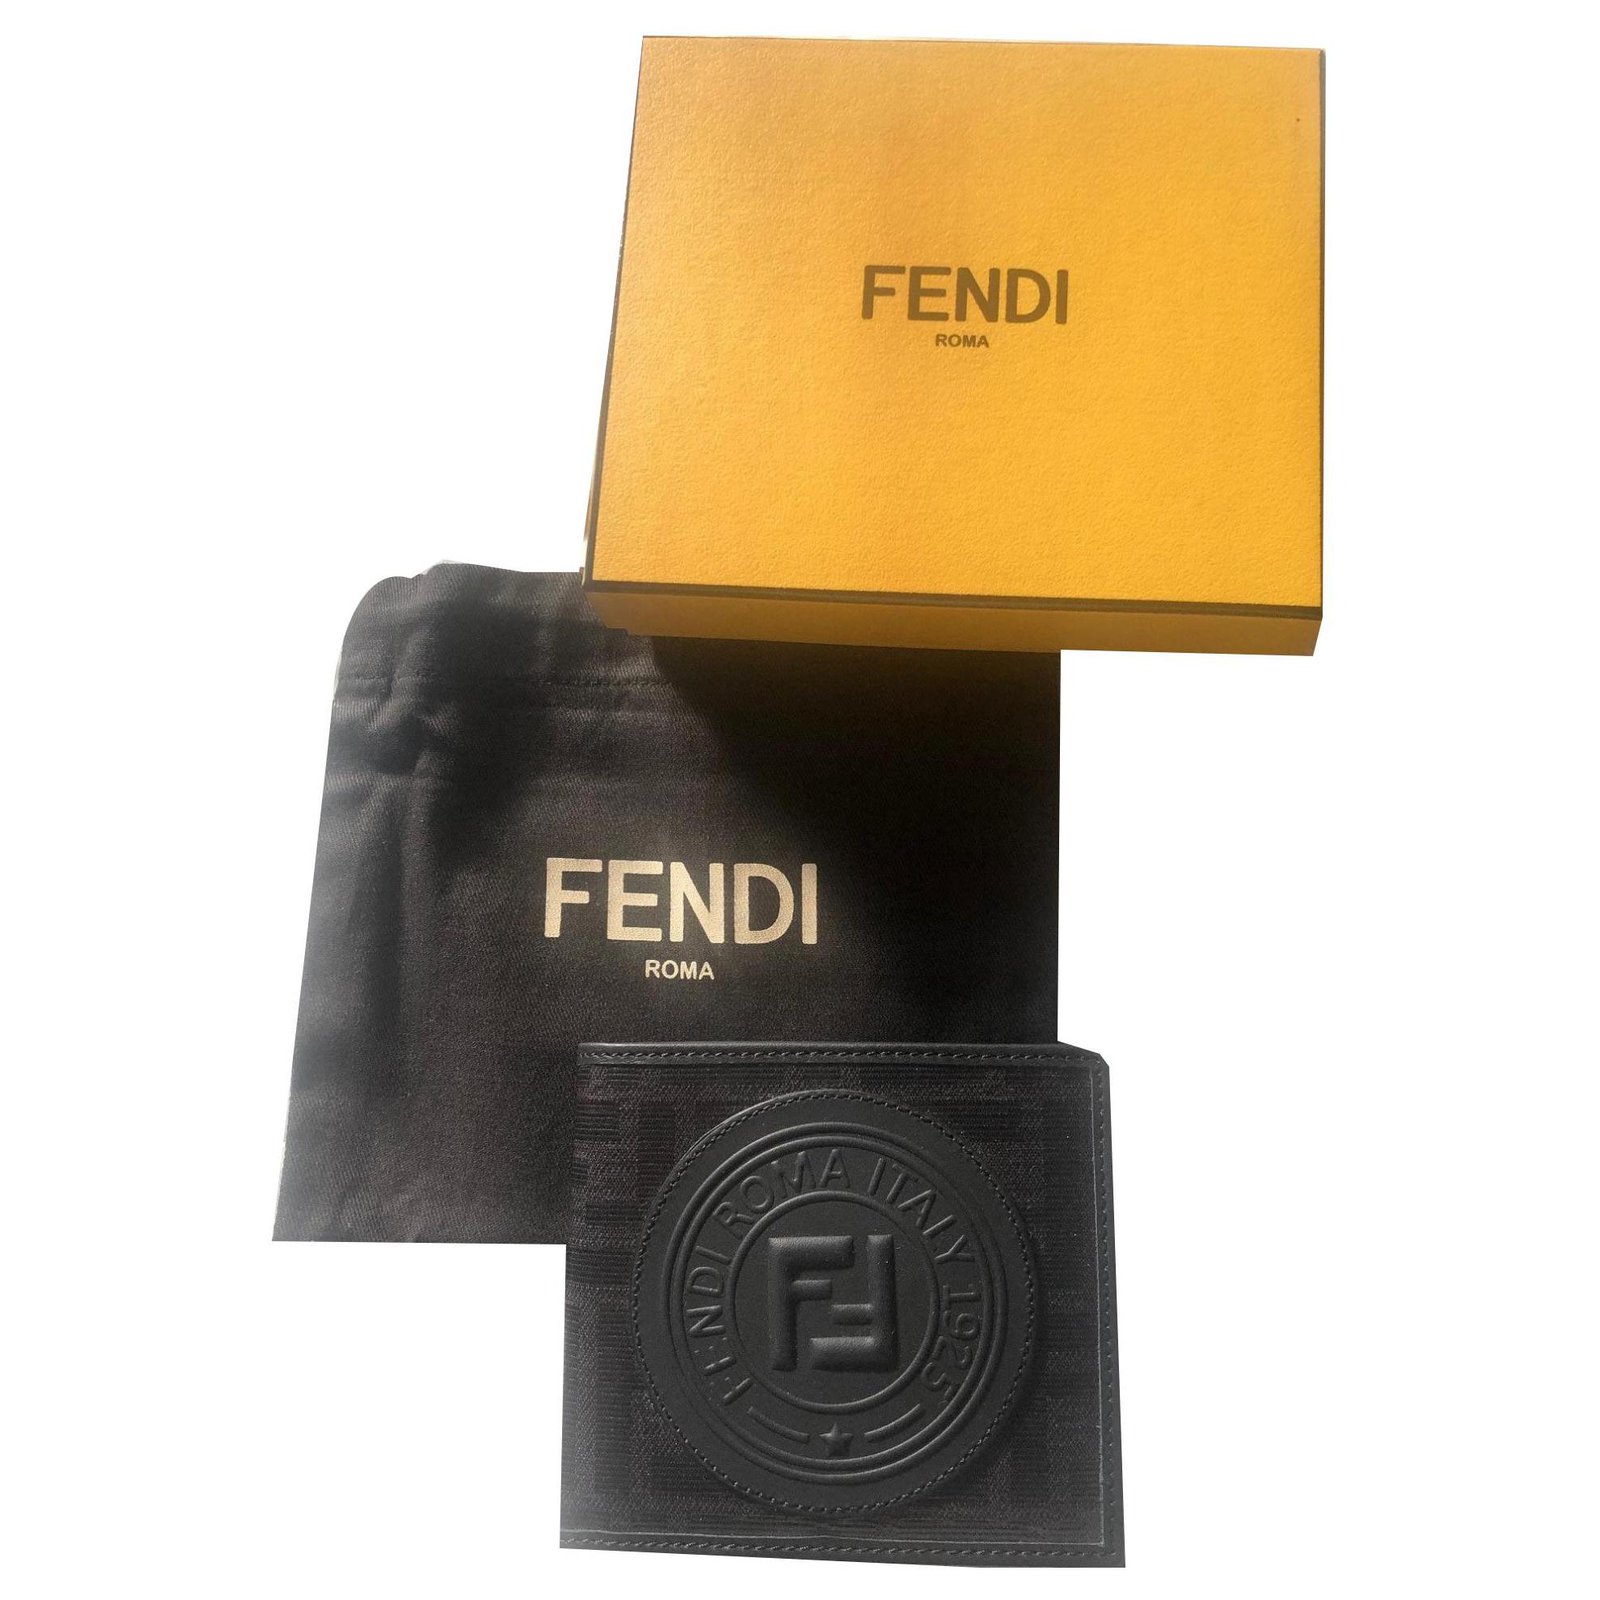 Fendi Fendi mens wallet new Wallets 